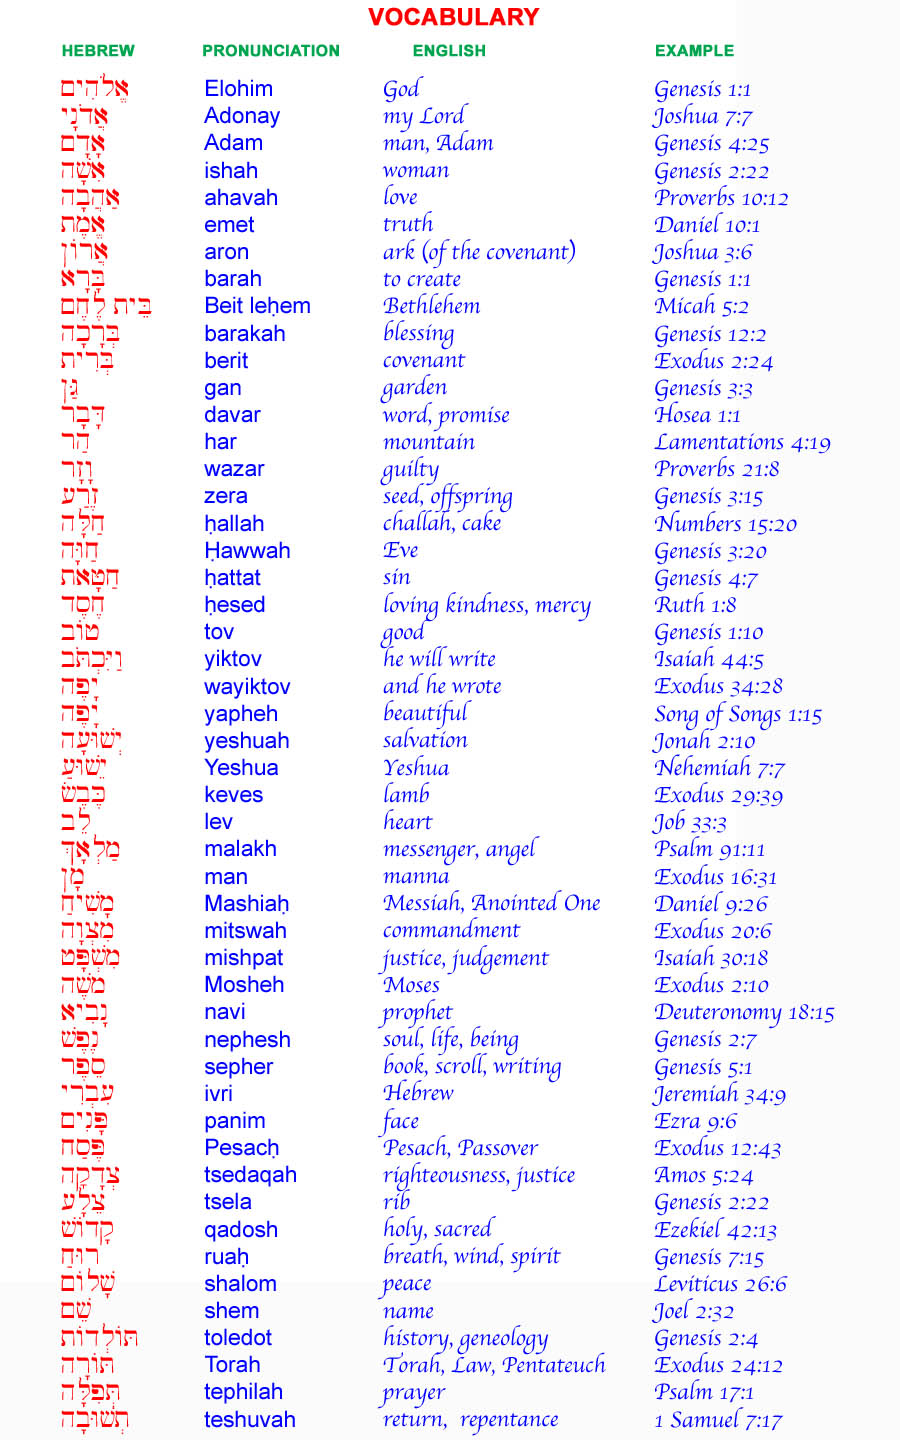 Hebrew vocabulary